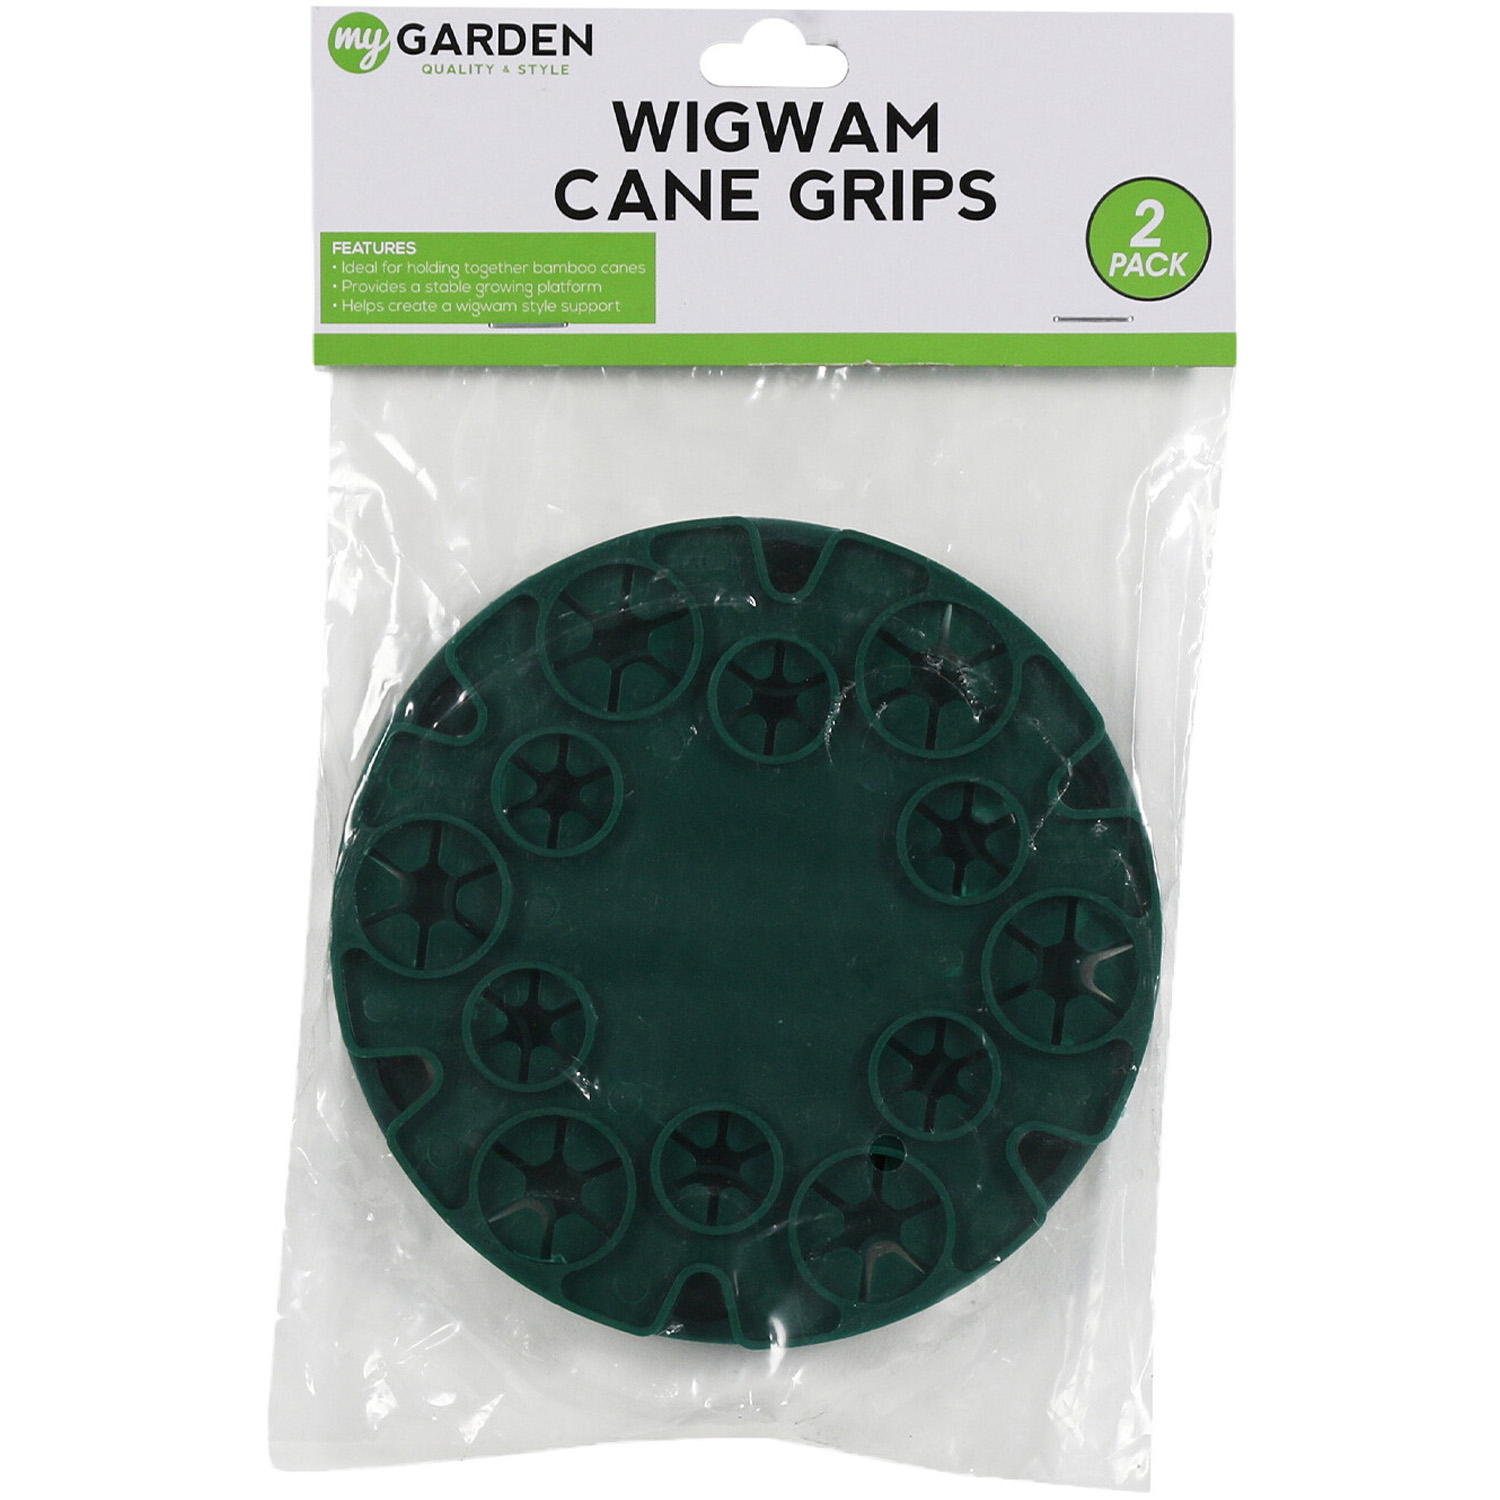 Wigwam Garden Cane Grips Image